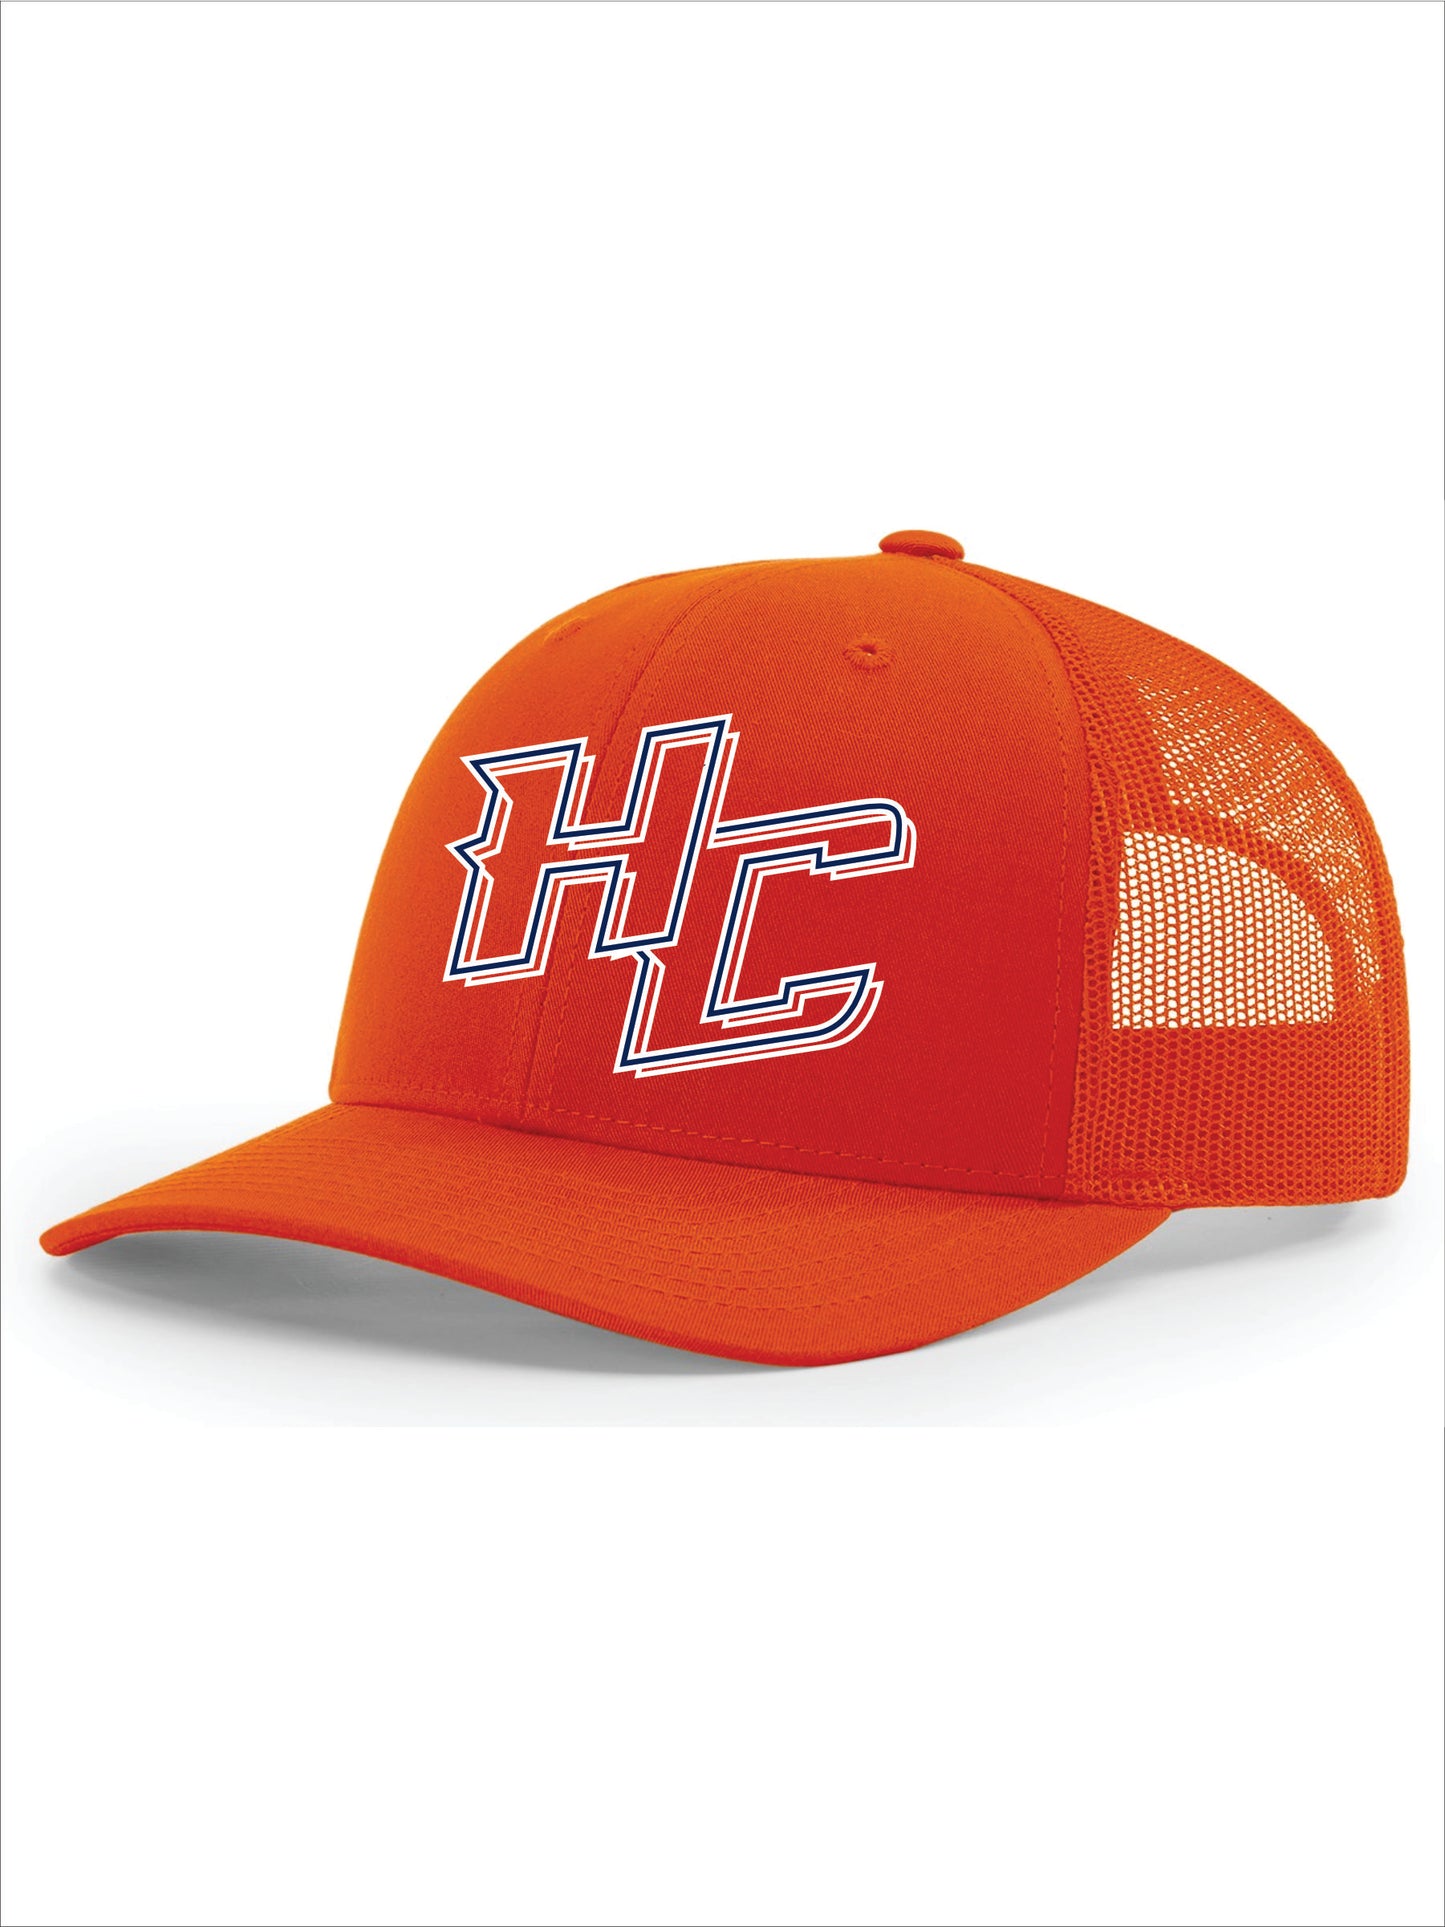 Houston Colts "HC" Trucker Cap